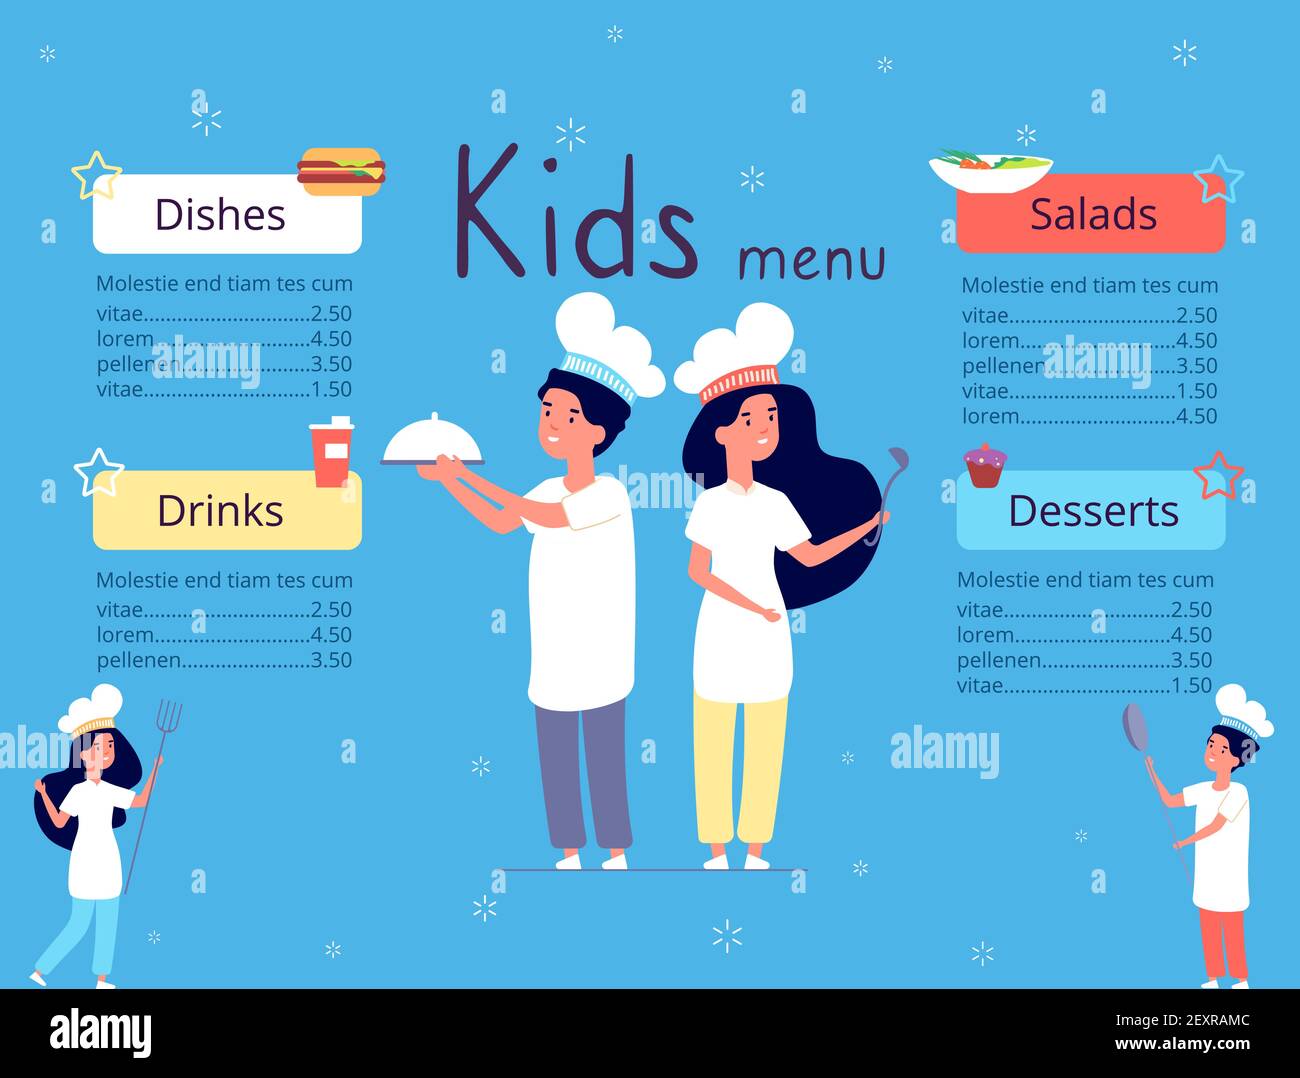 Kids menu. Children in chef hat cooking food in kitchen. Restaurant brochure cover cartoon vector design template. Child menu, childish chef cooking in restaurant illustration Stock Vector